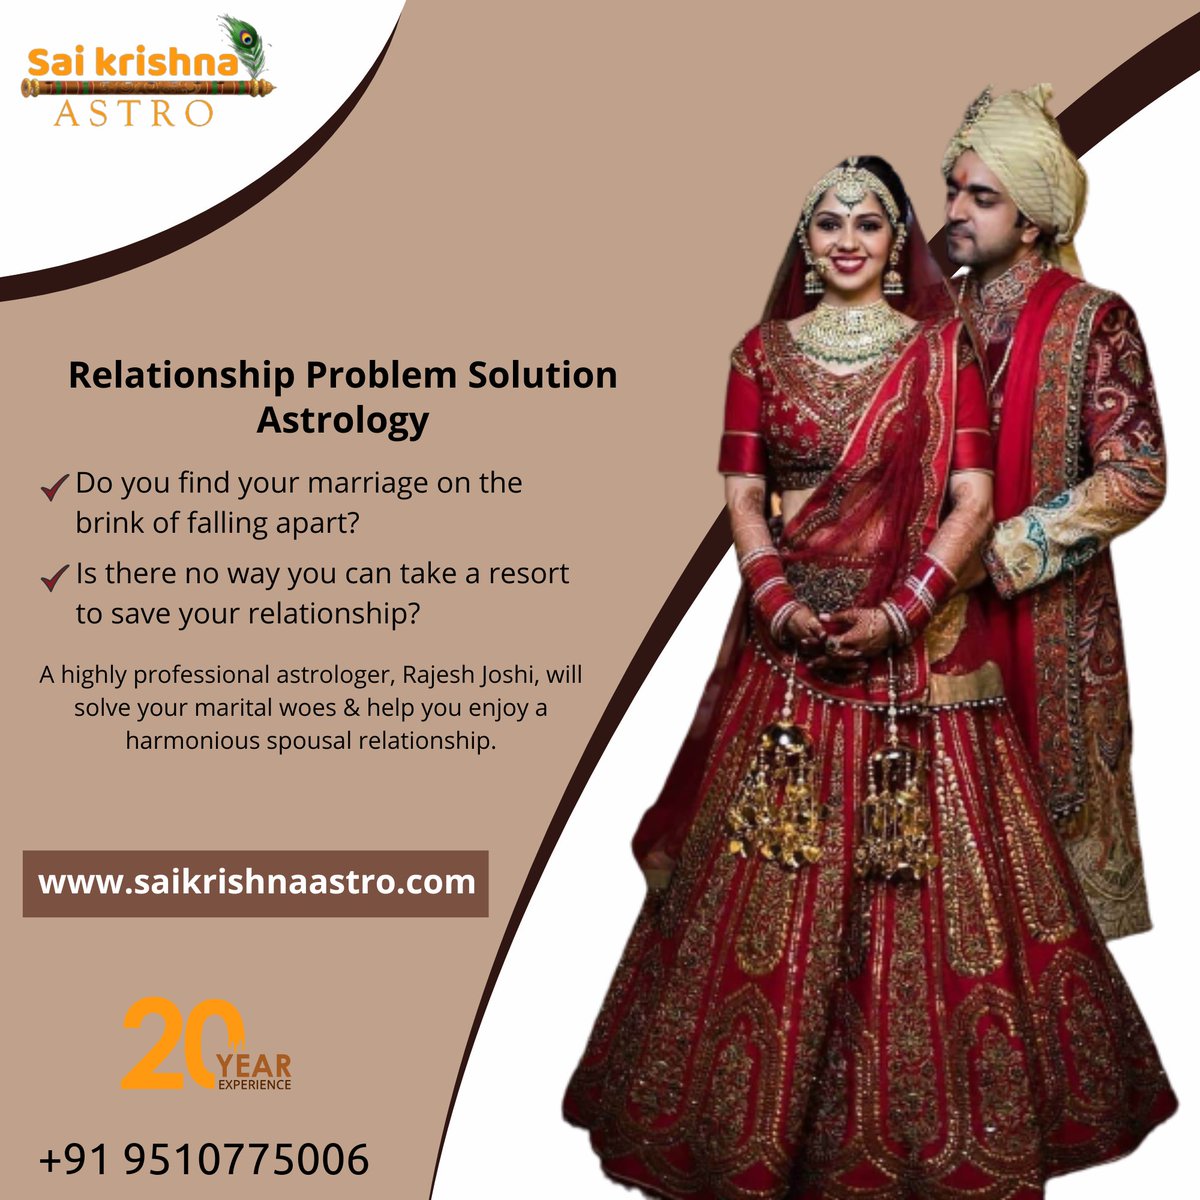 𝗥𝗲𝗹𝗮𝘁𝗶𝗼𝗻𝘀𝗵𝗶𝗽 𝗣𝗿𝗼𝗯𝗹𝗲𝗺 𝗦𝗼𝗹𝘂𝘁𝗶𝗼𝗻 𝗔𝘀𝘁𝗿𝗼𝗹𝗼𝗴𝘆

📞 +919510775006

#Marriage #LoveMarriage #MarriageSolution #Astrologer #AstrologyGuidance #RajeshJoshiAstrologer #SaiKrishnaAstro #Ahmedabad #Gujarat